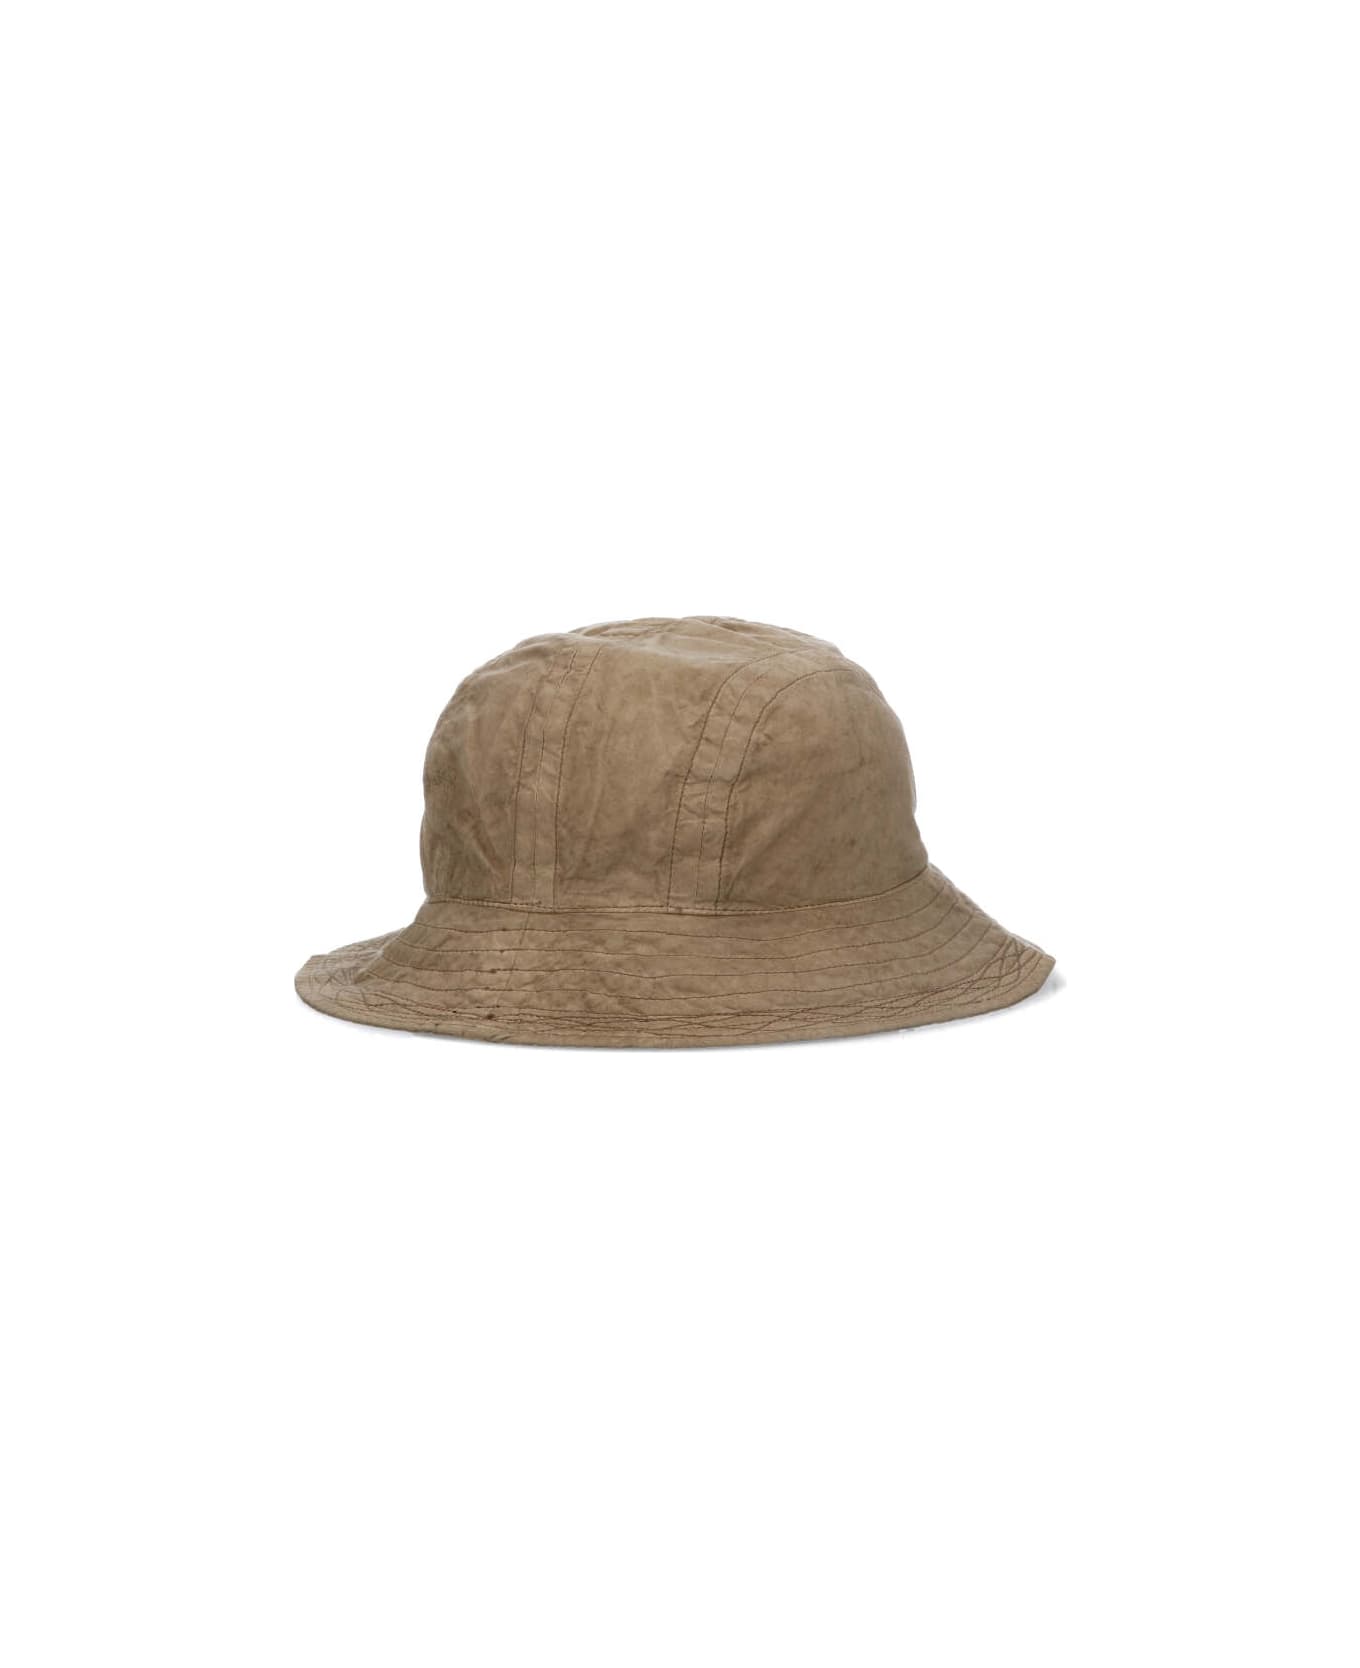 C.P. Company 'ba-tic Light' Bucket Hat - Brown